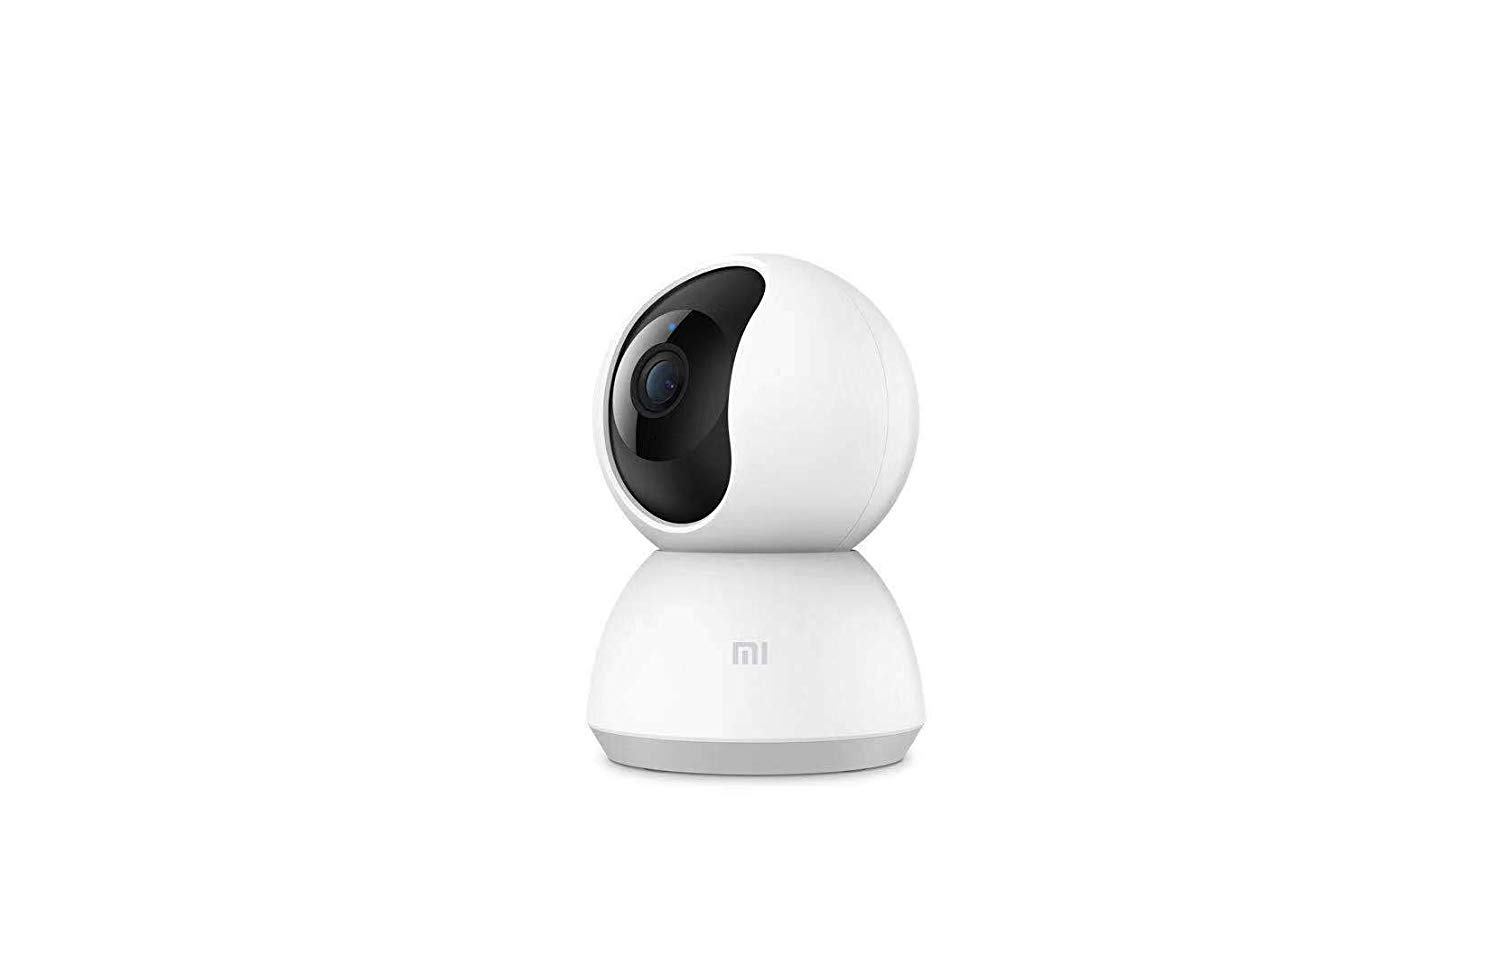 Solo 30 € la Xiaomi Mi Home, evoluta videocamera Wi-Fi di sicurezza, per una casa più sicura